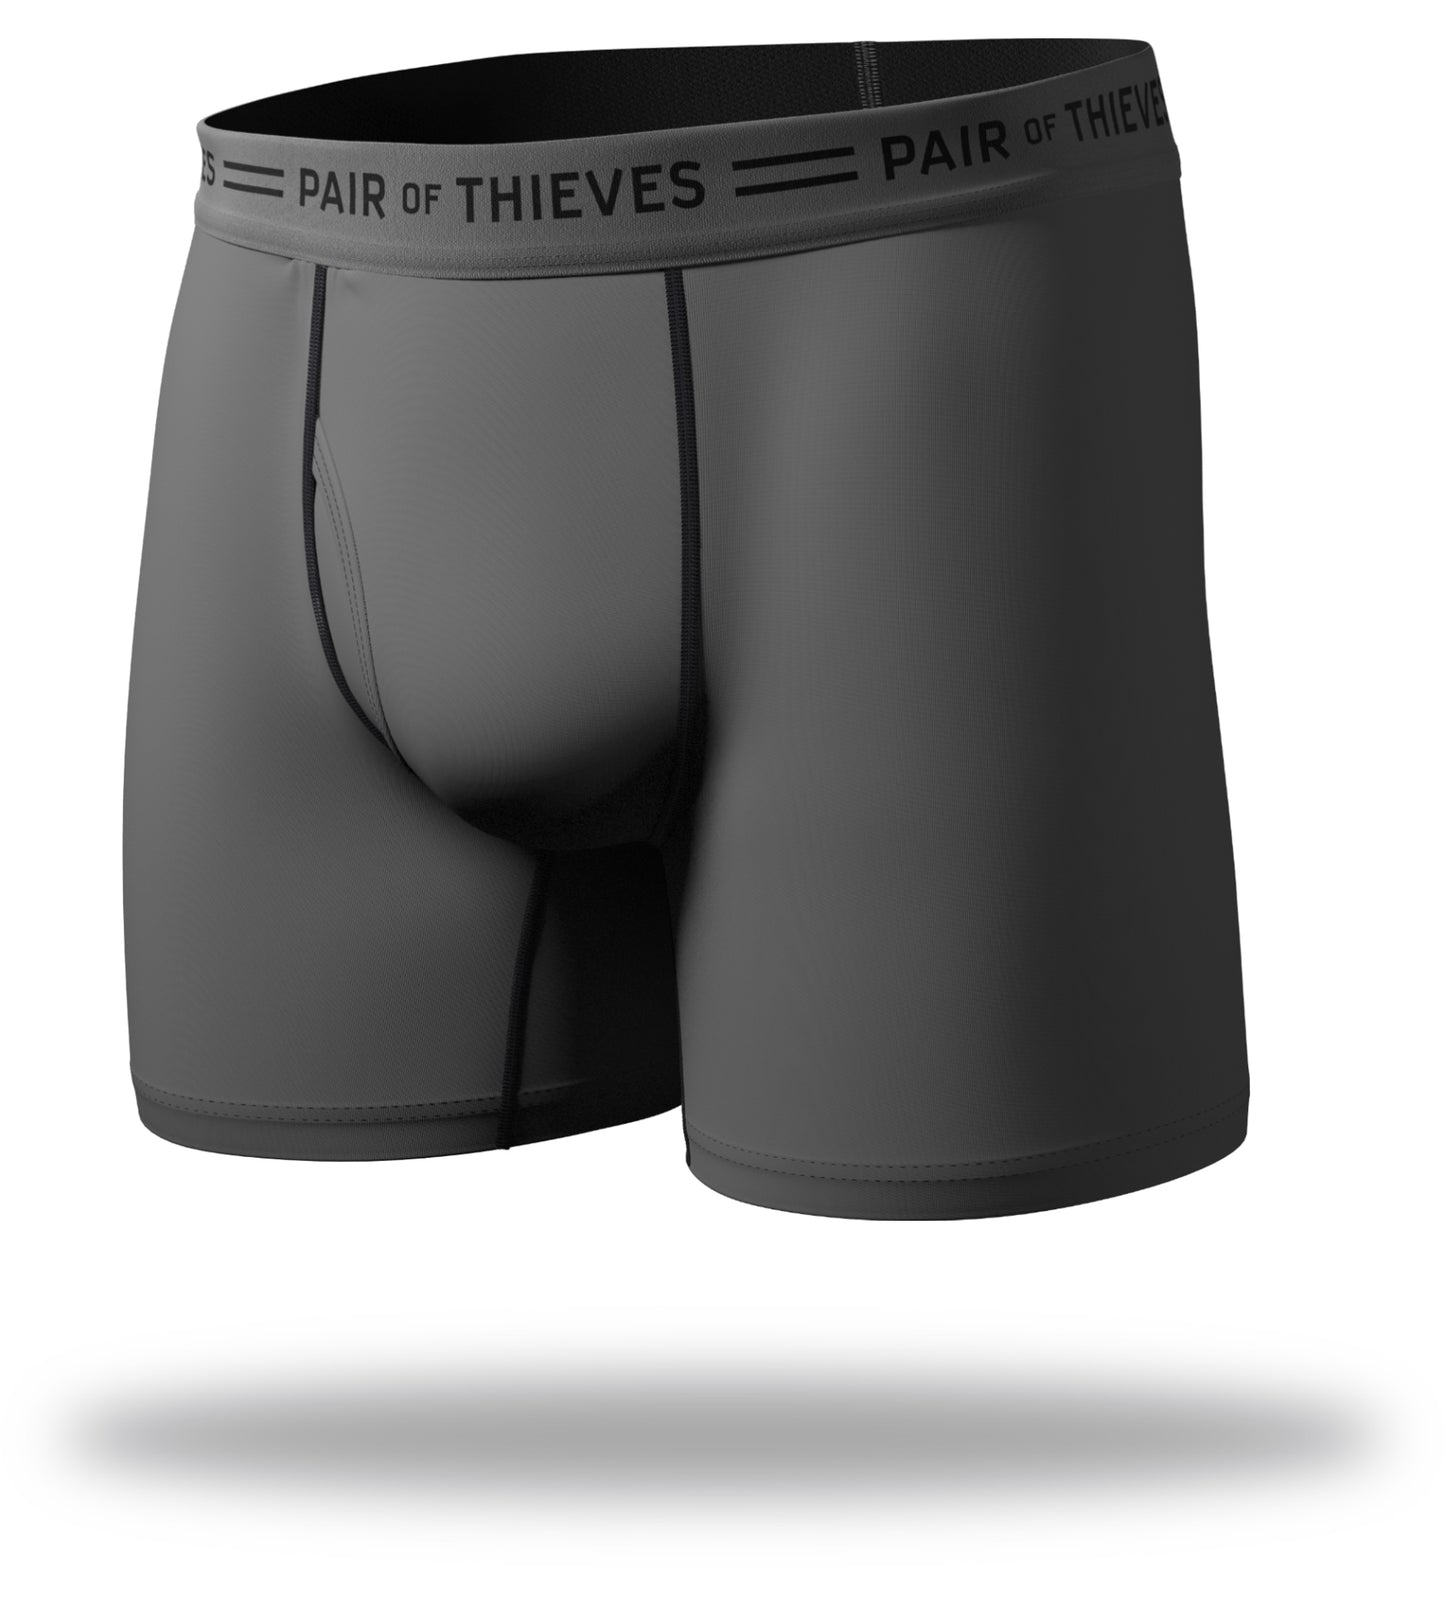 Men's Every Day Kit Boxer Brief 4 Pack DARK NAVY – Pair of Thieves